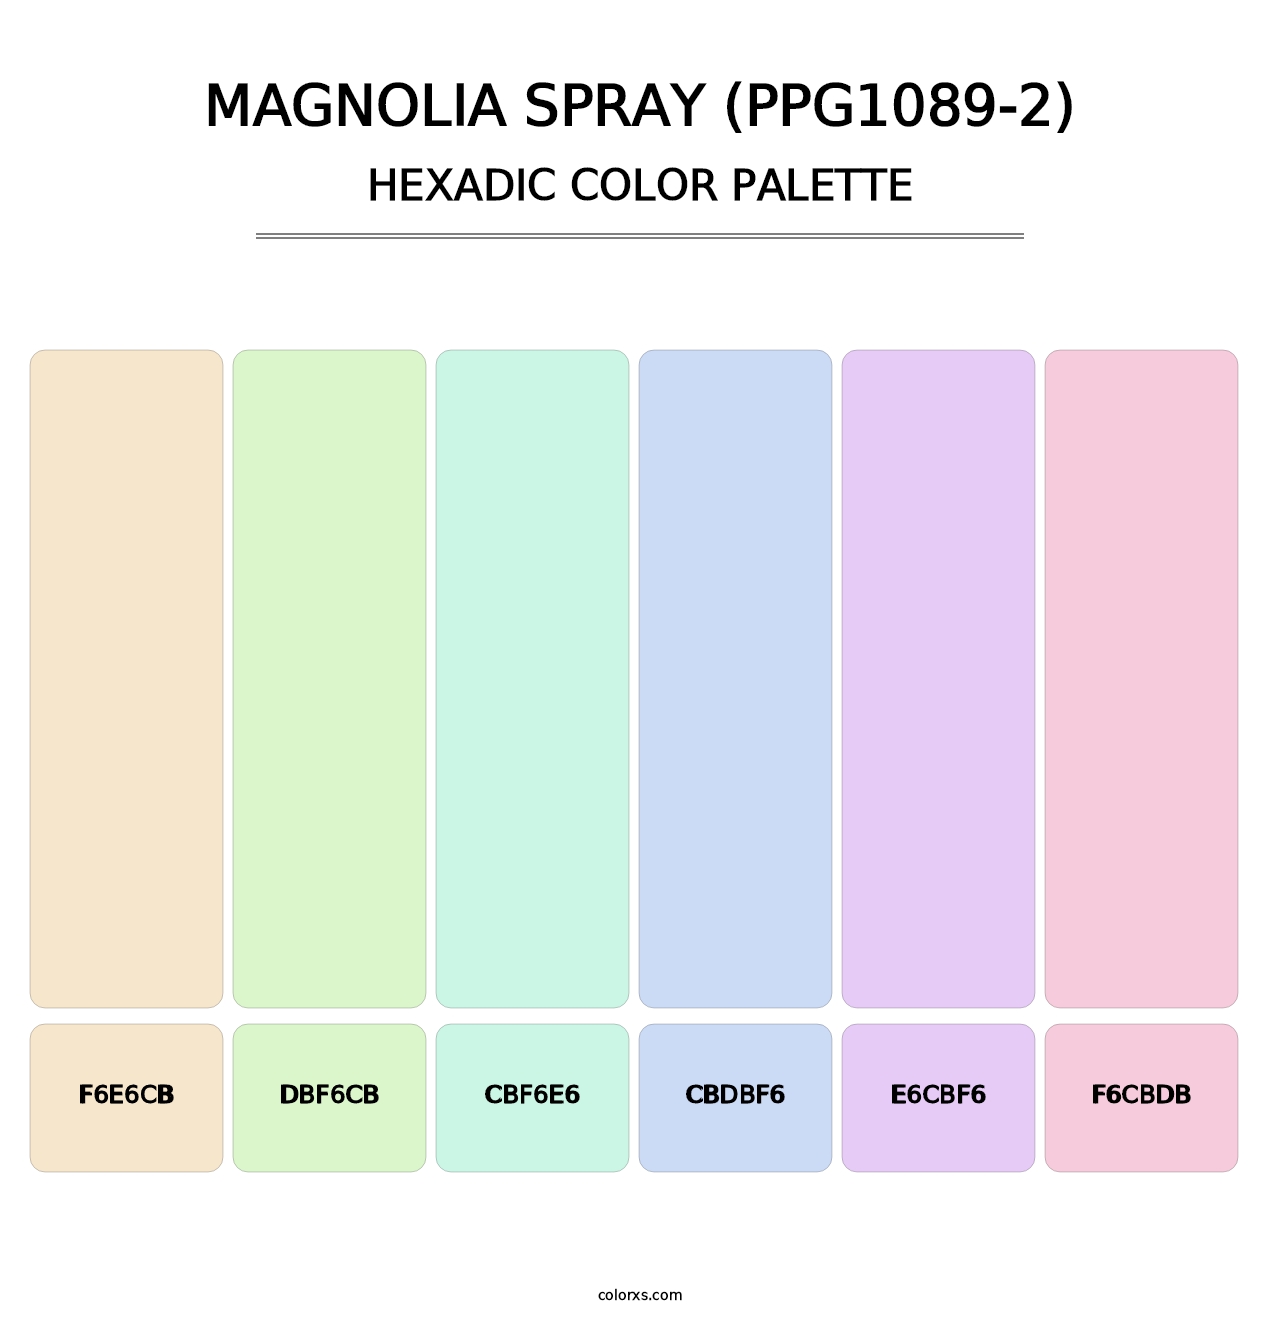 Magnolia Spray (PPG1089-2) - Hexadic Color Palette